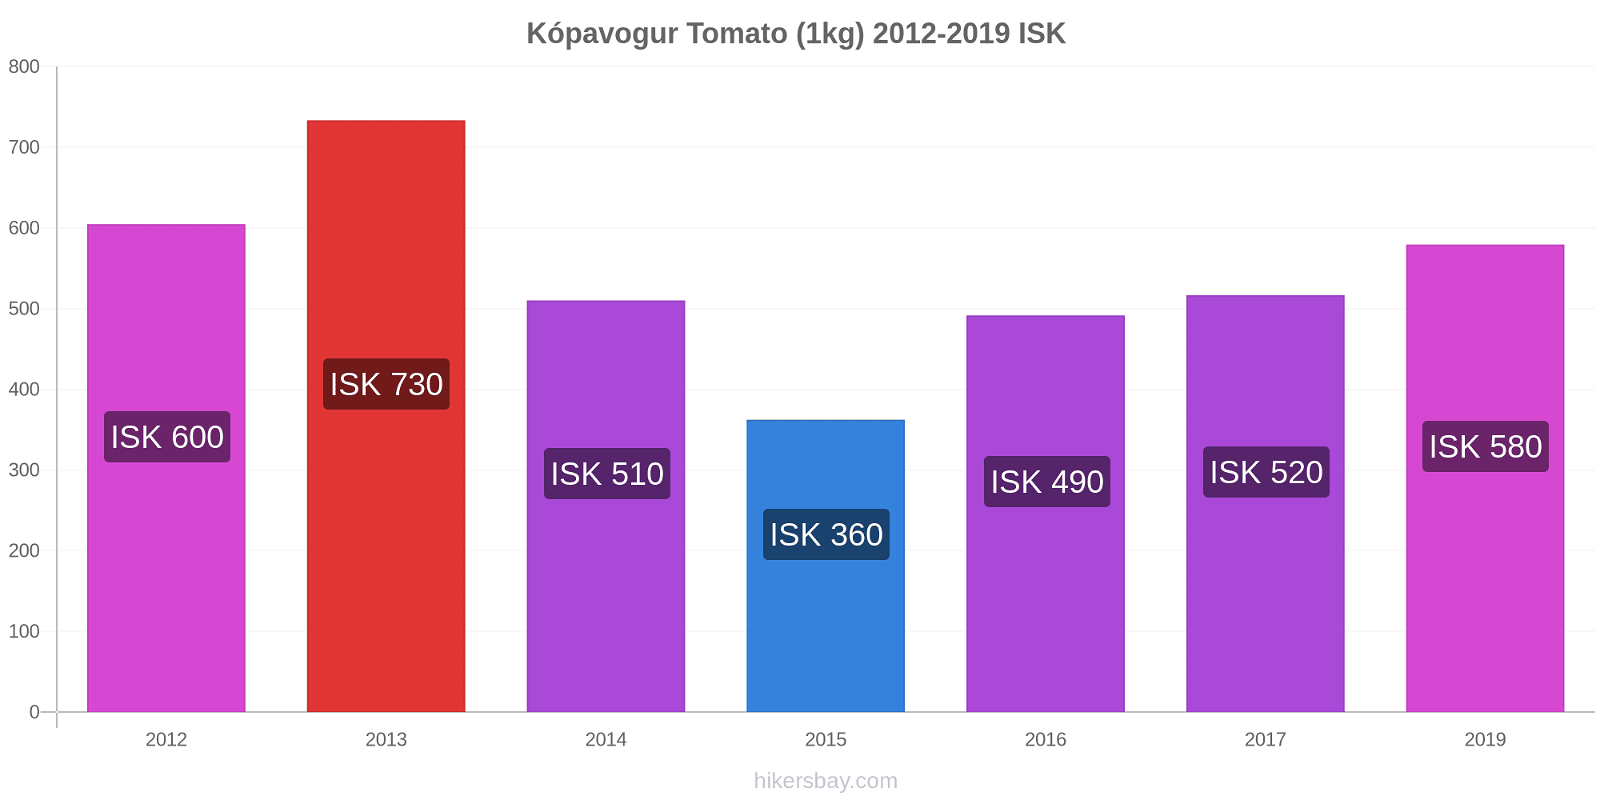 Kópavogur price changes Tomato (1kg) hikersbay.com